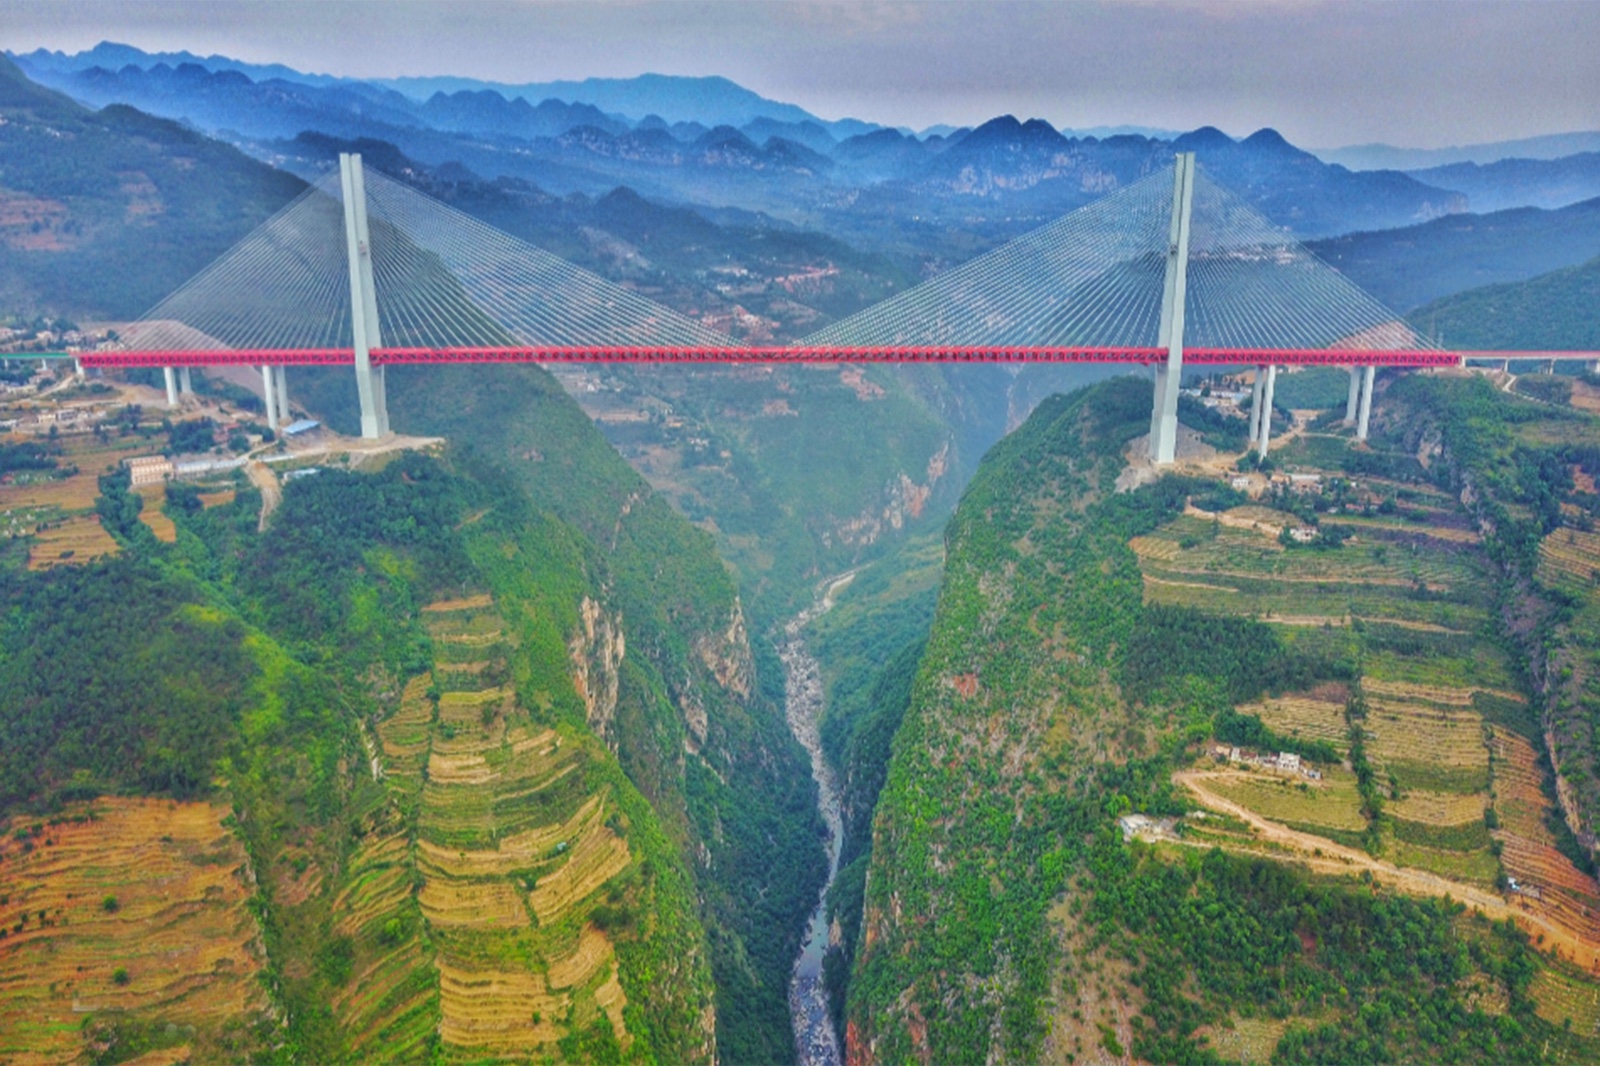 300 meter-long glass-bottomed suspension bridge opens in the Shiniuzhai National Geopark ...